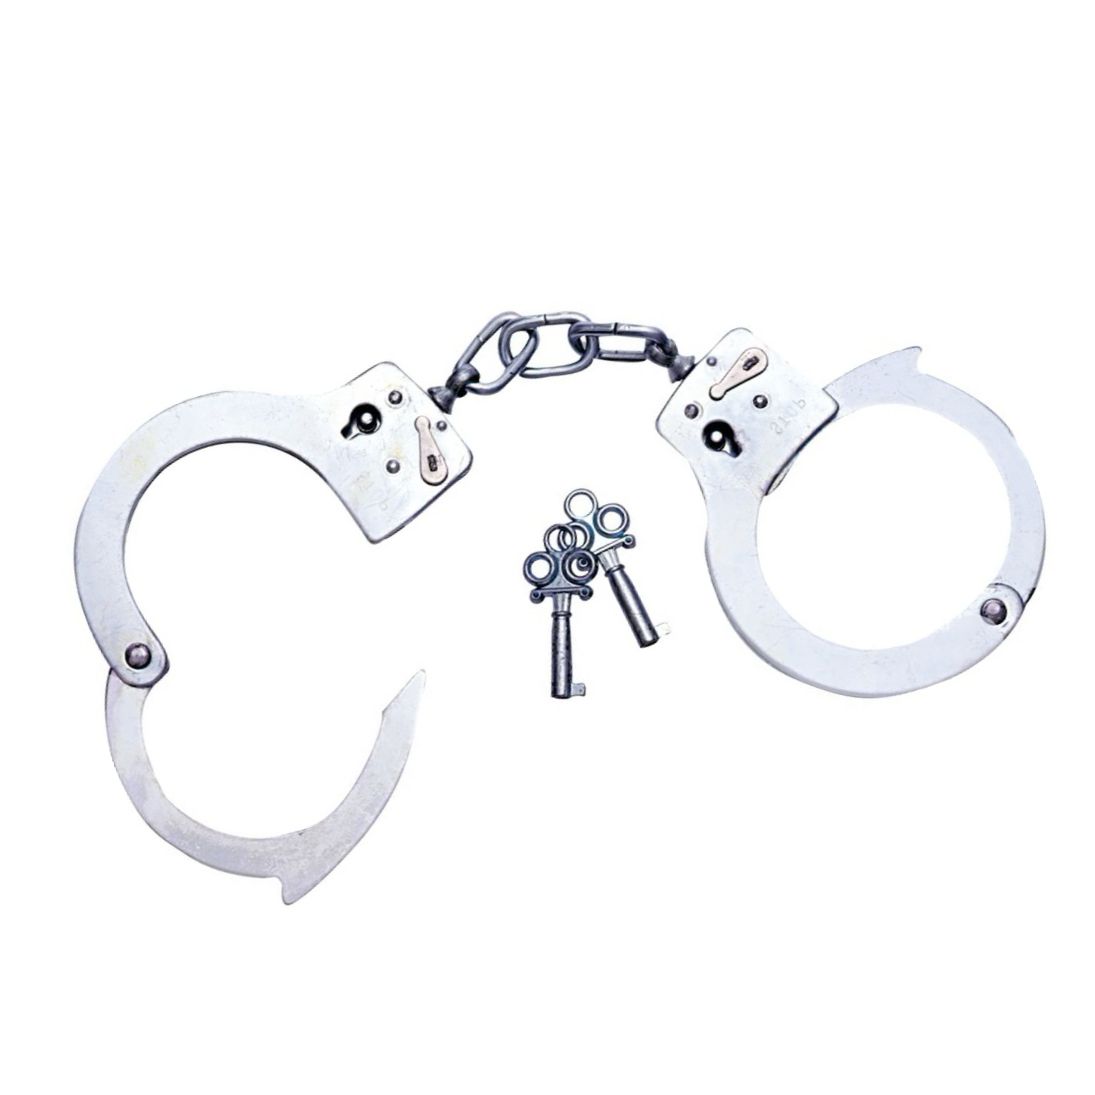 Catuse Police Arrest Handcuffs